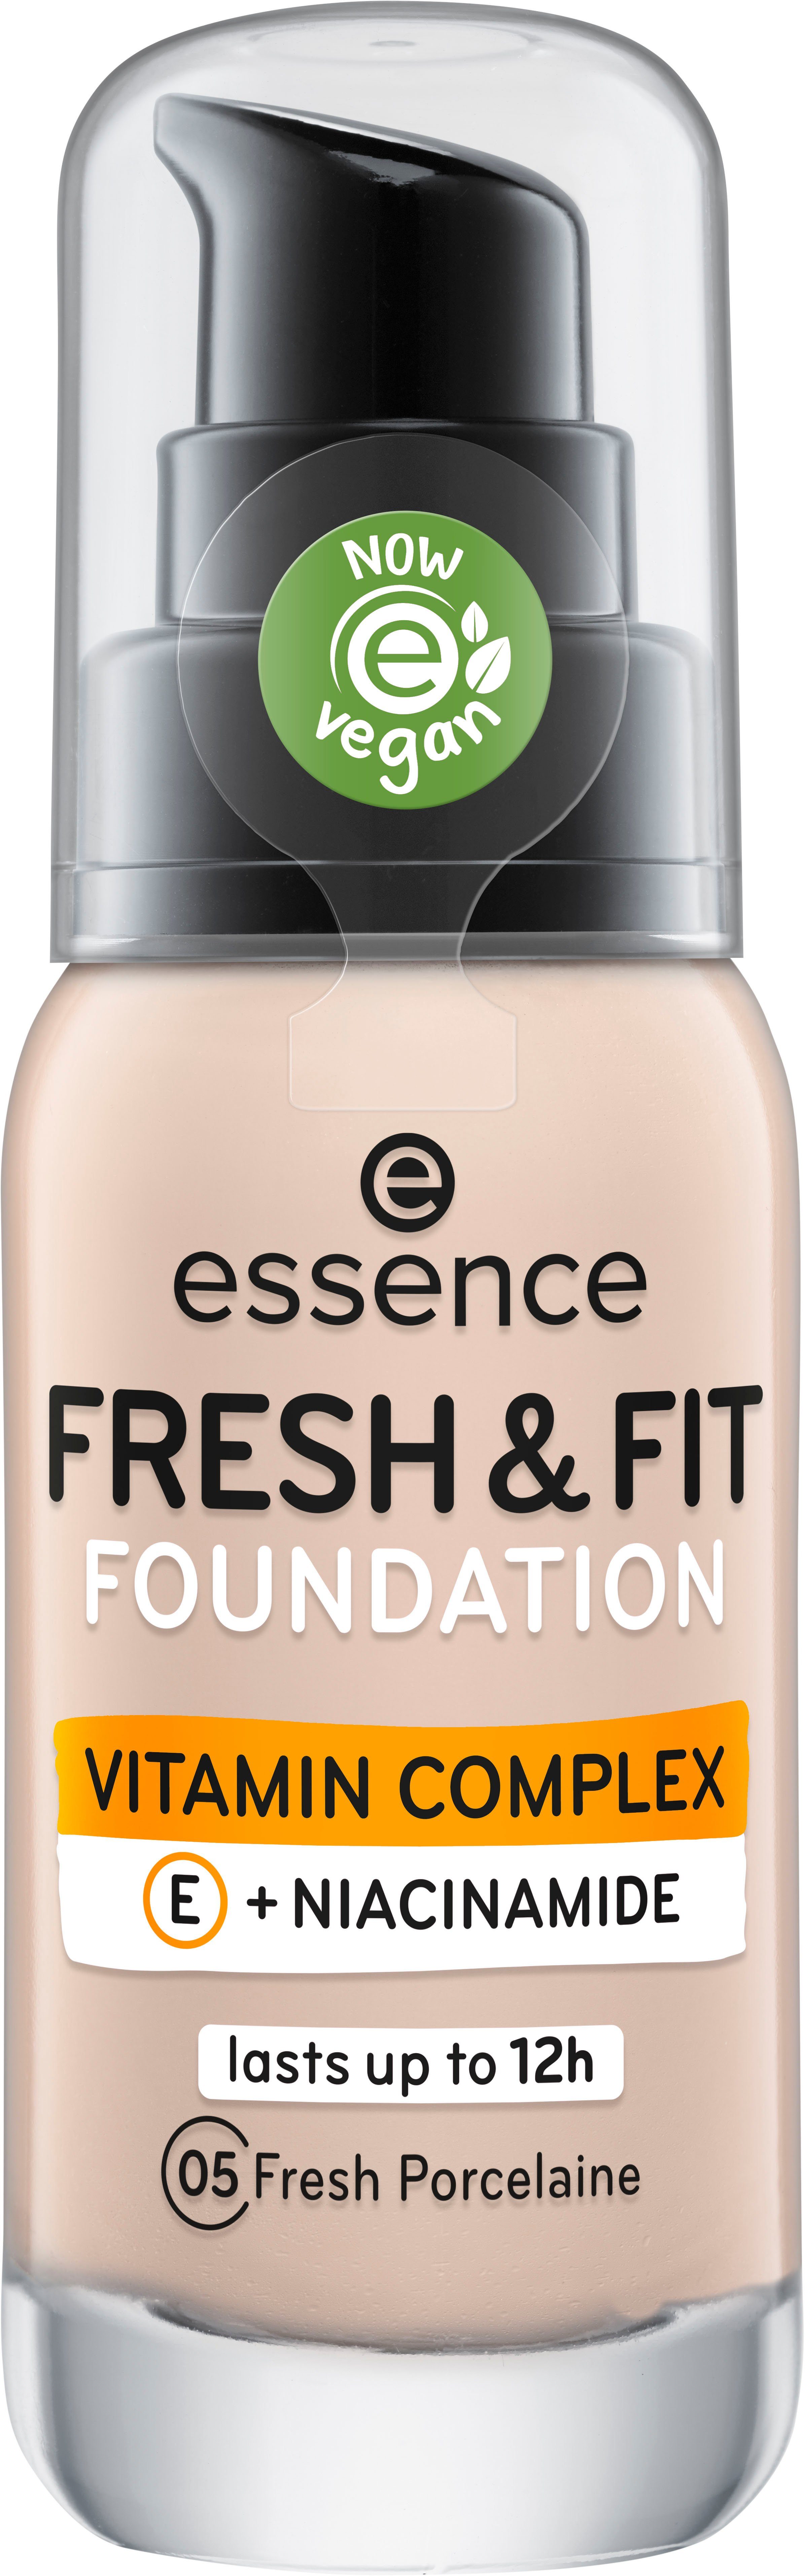 3-tlg. porcelaine FRESH fresh FIT Foundation Essence & FOUNDATION,